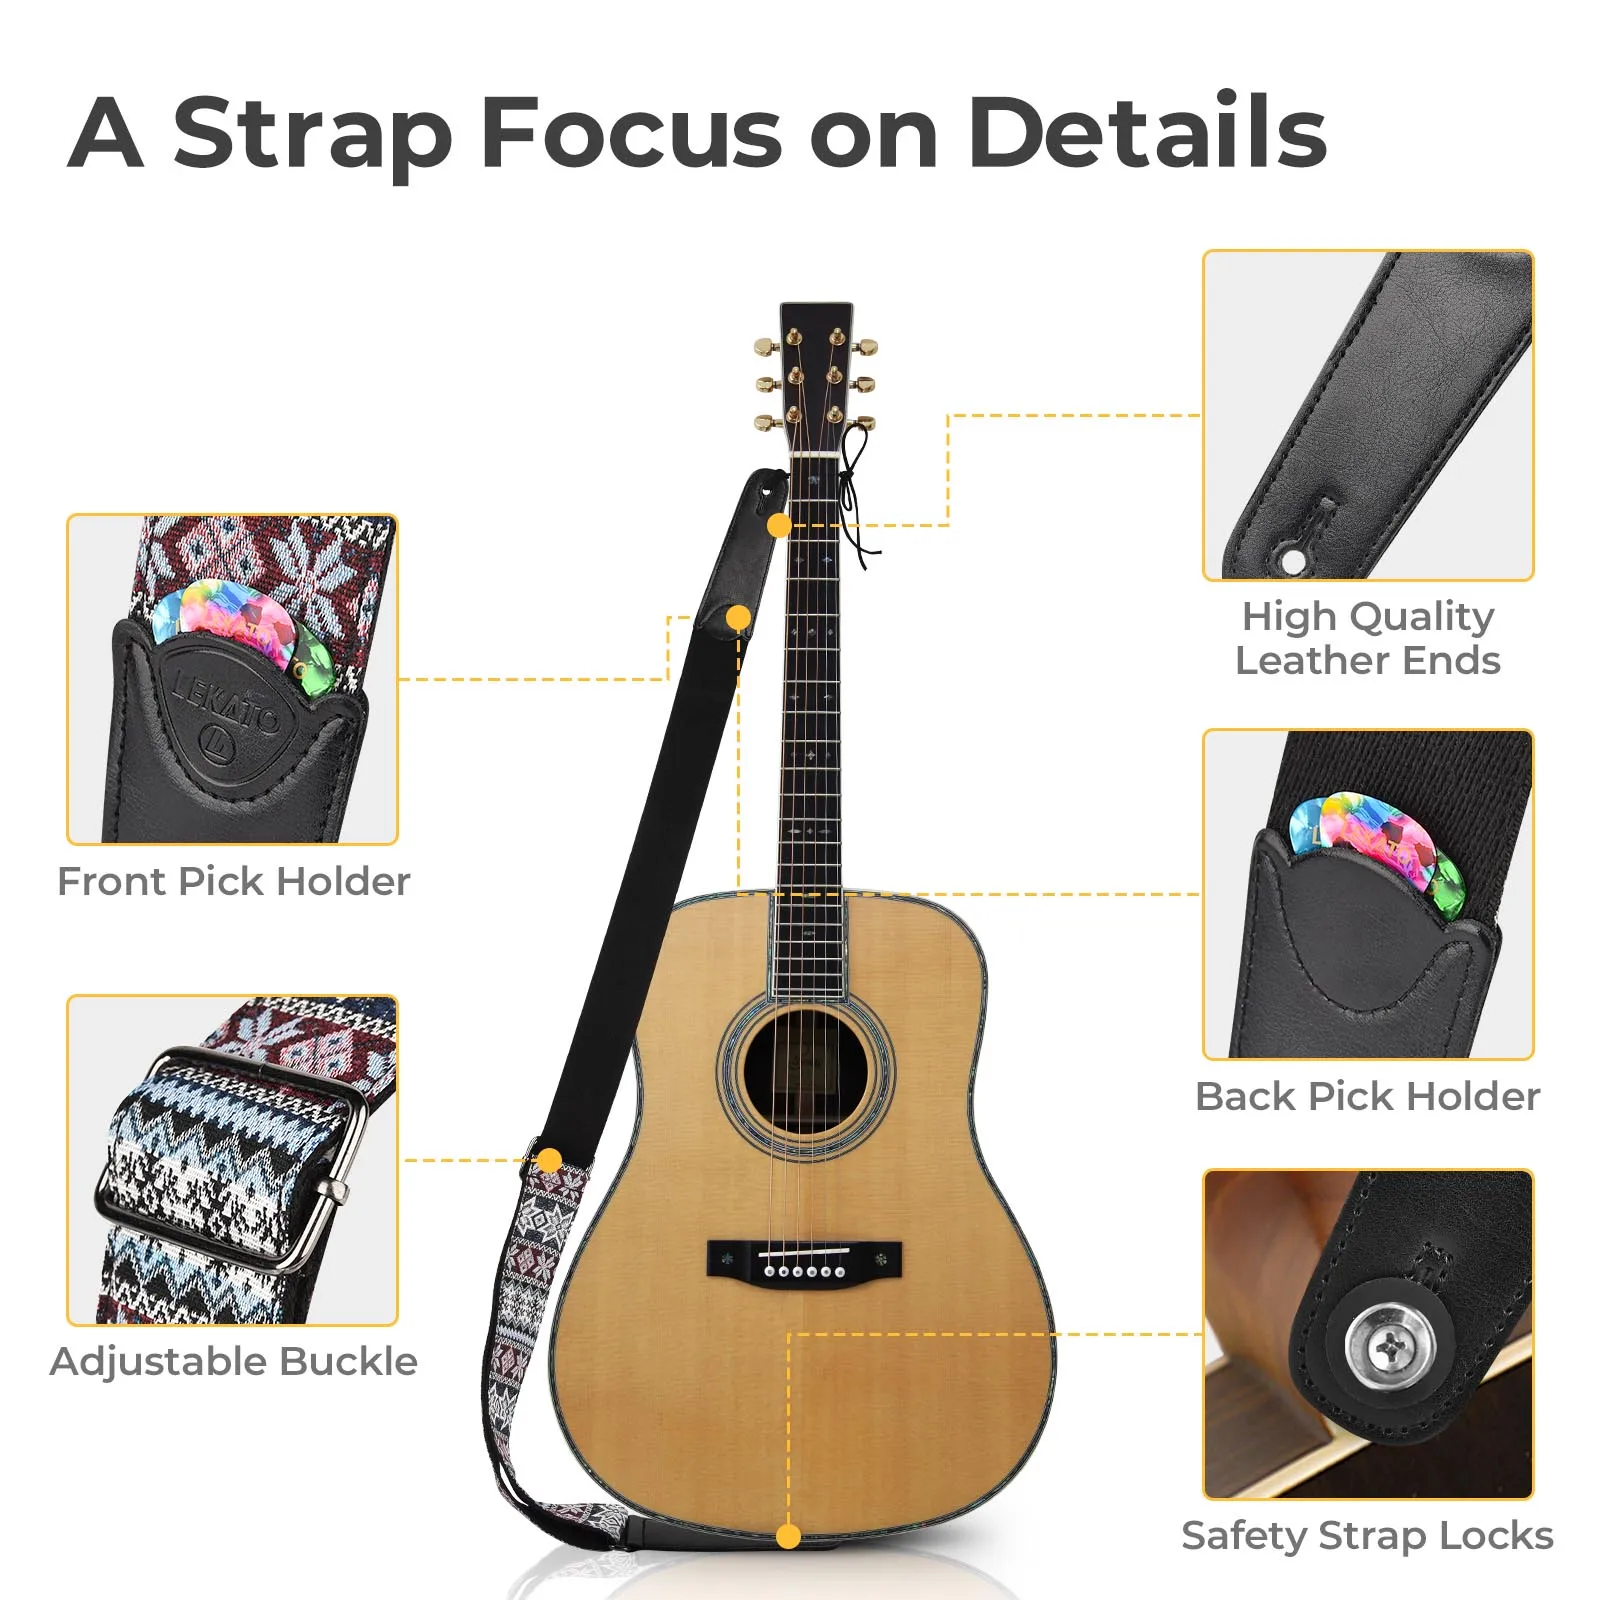 LEKATO Bass/Acoustic/Electric Guitar Strap Embroidery Bohemian